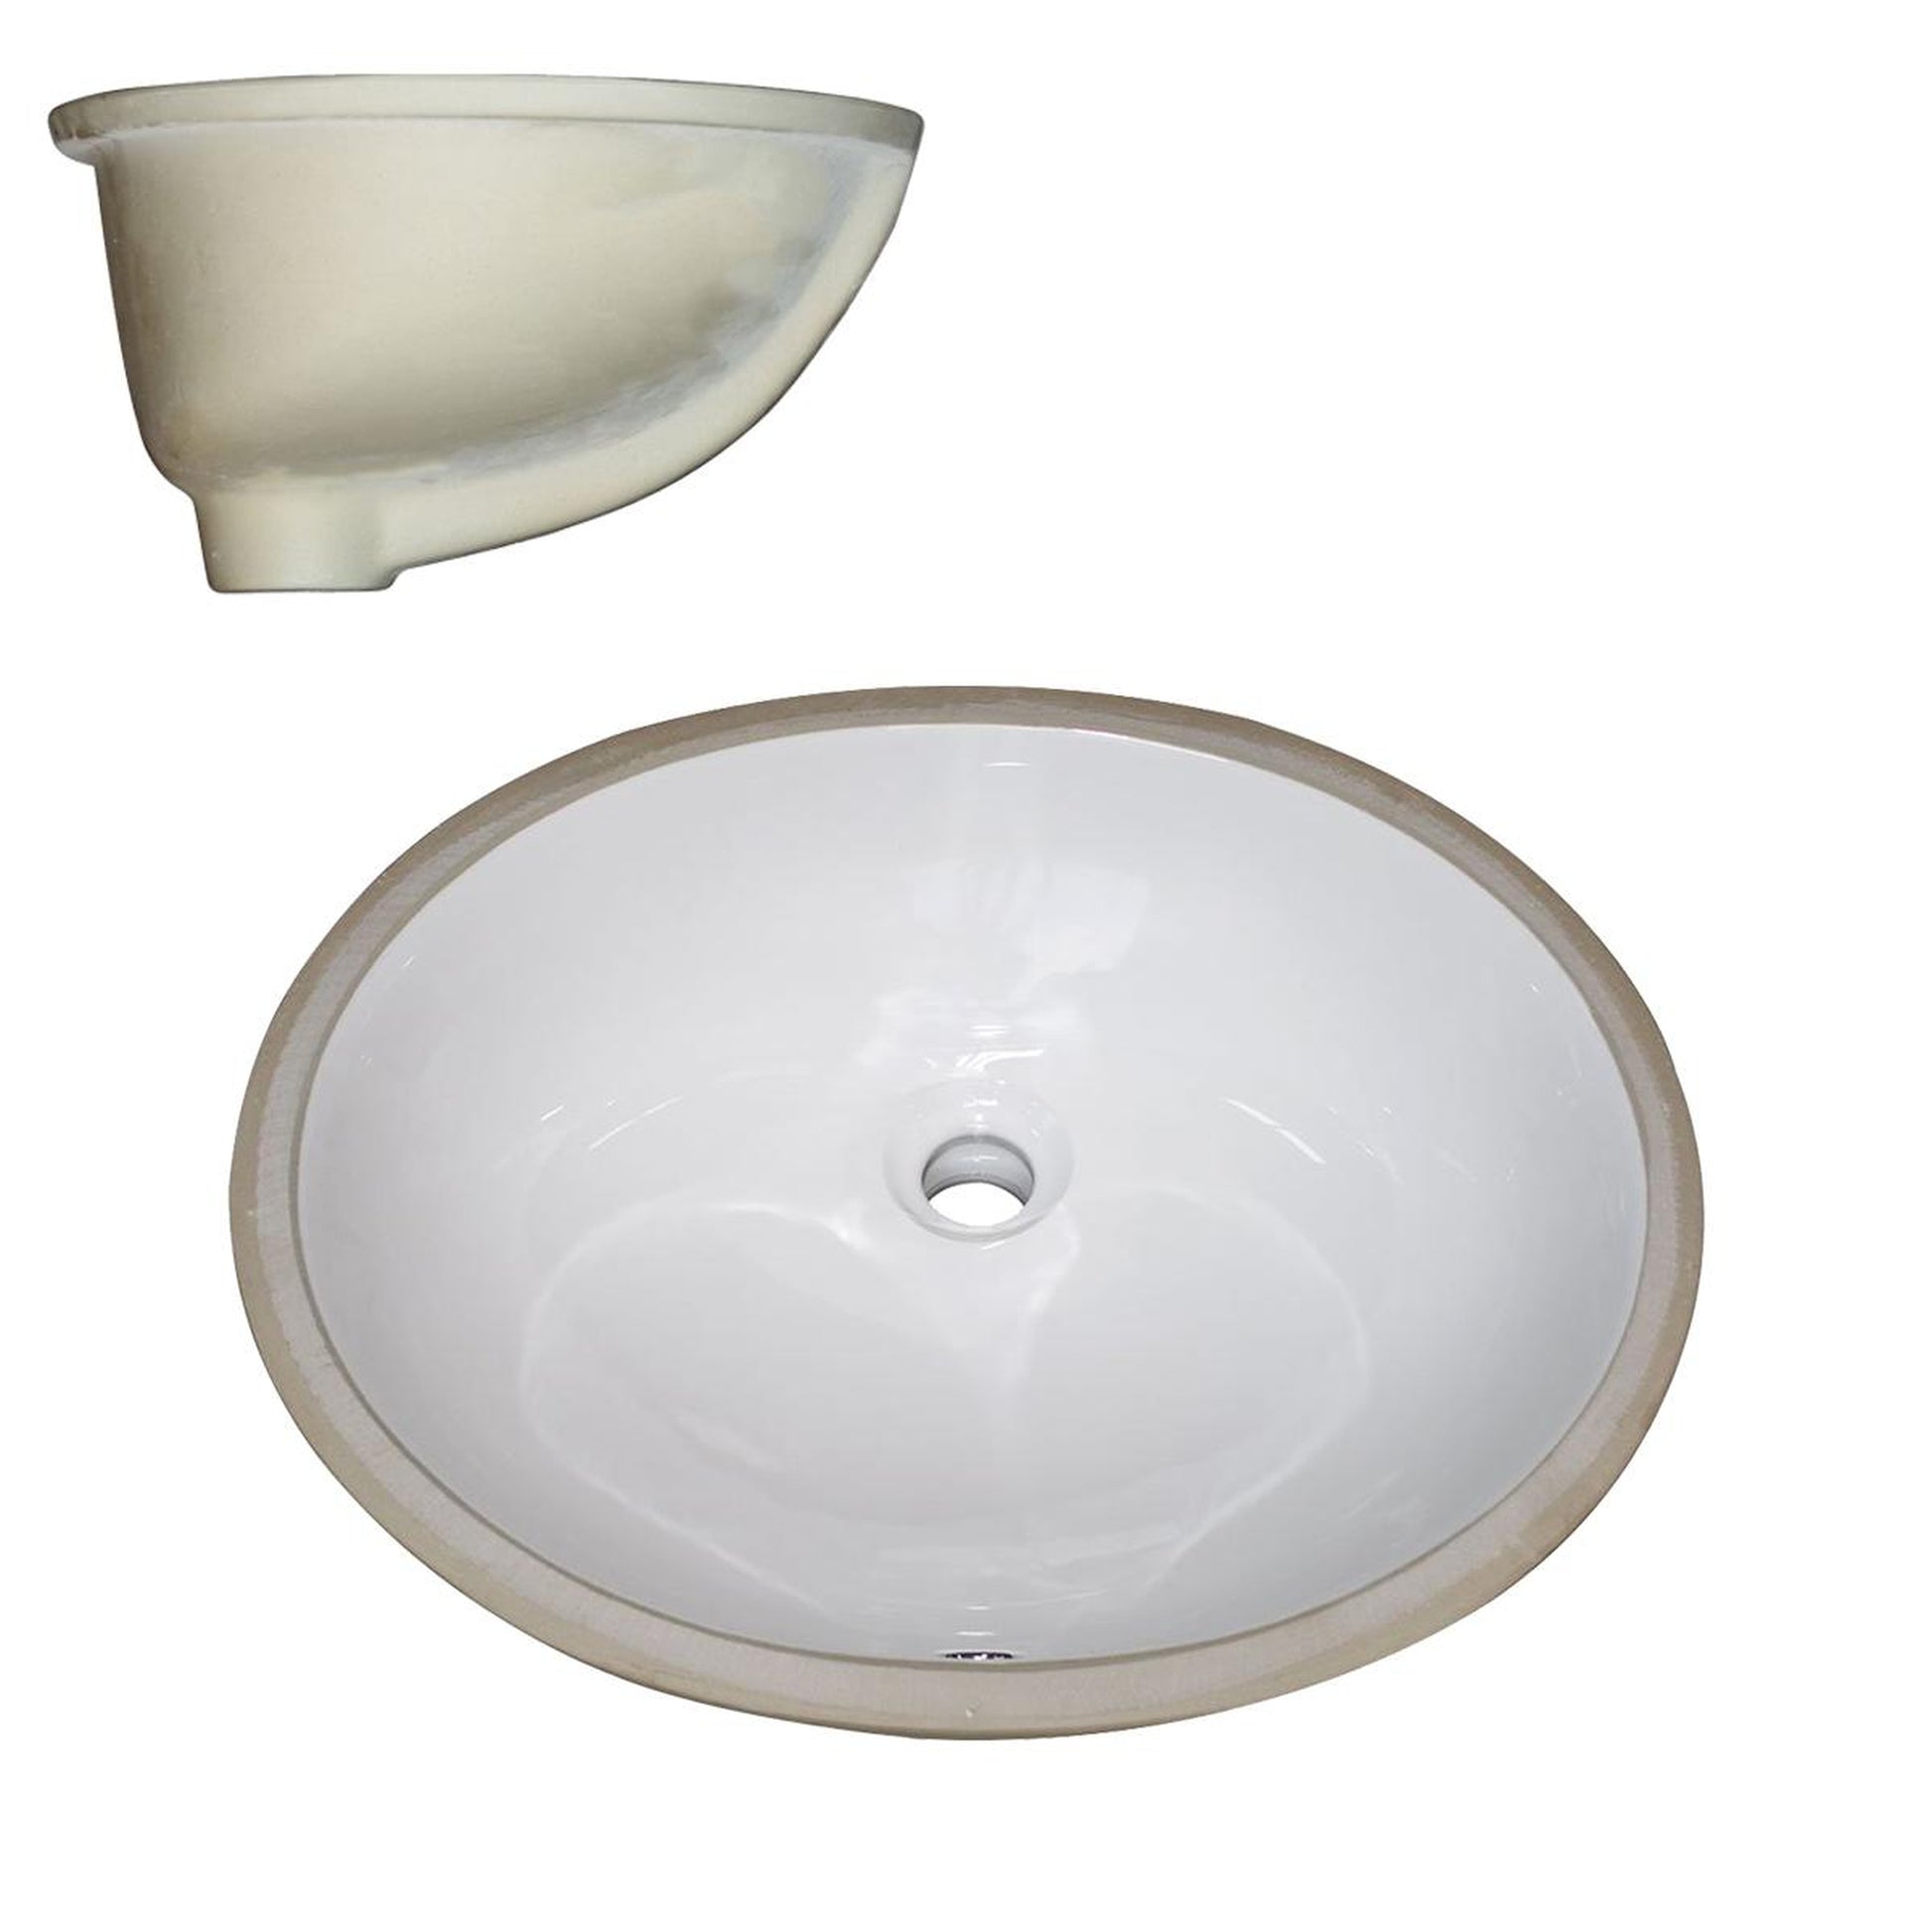 Pelican Int'l Pearl Series PL-3059 17 1/4" x 14" White Porcelain Undermount Bathroom Sink